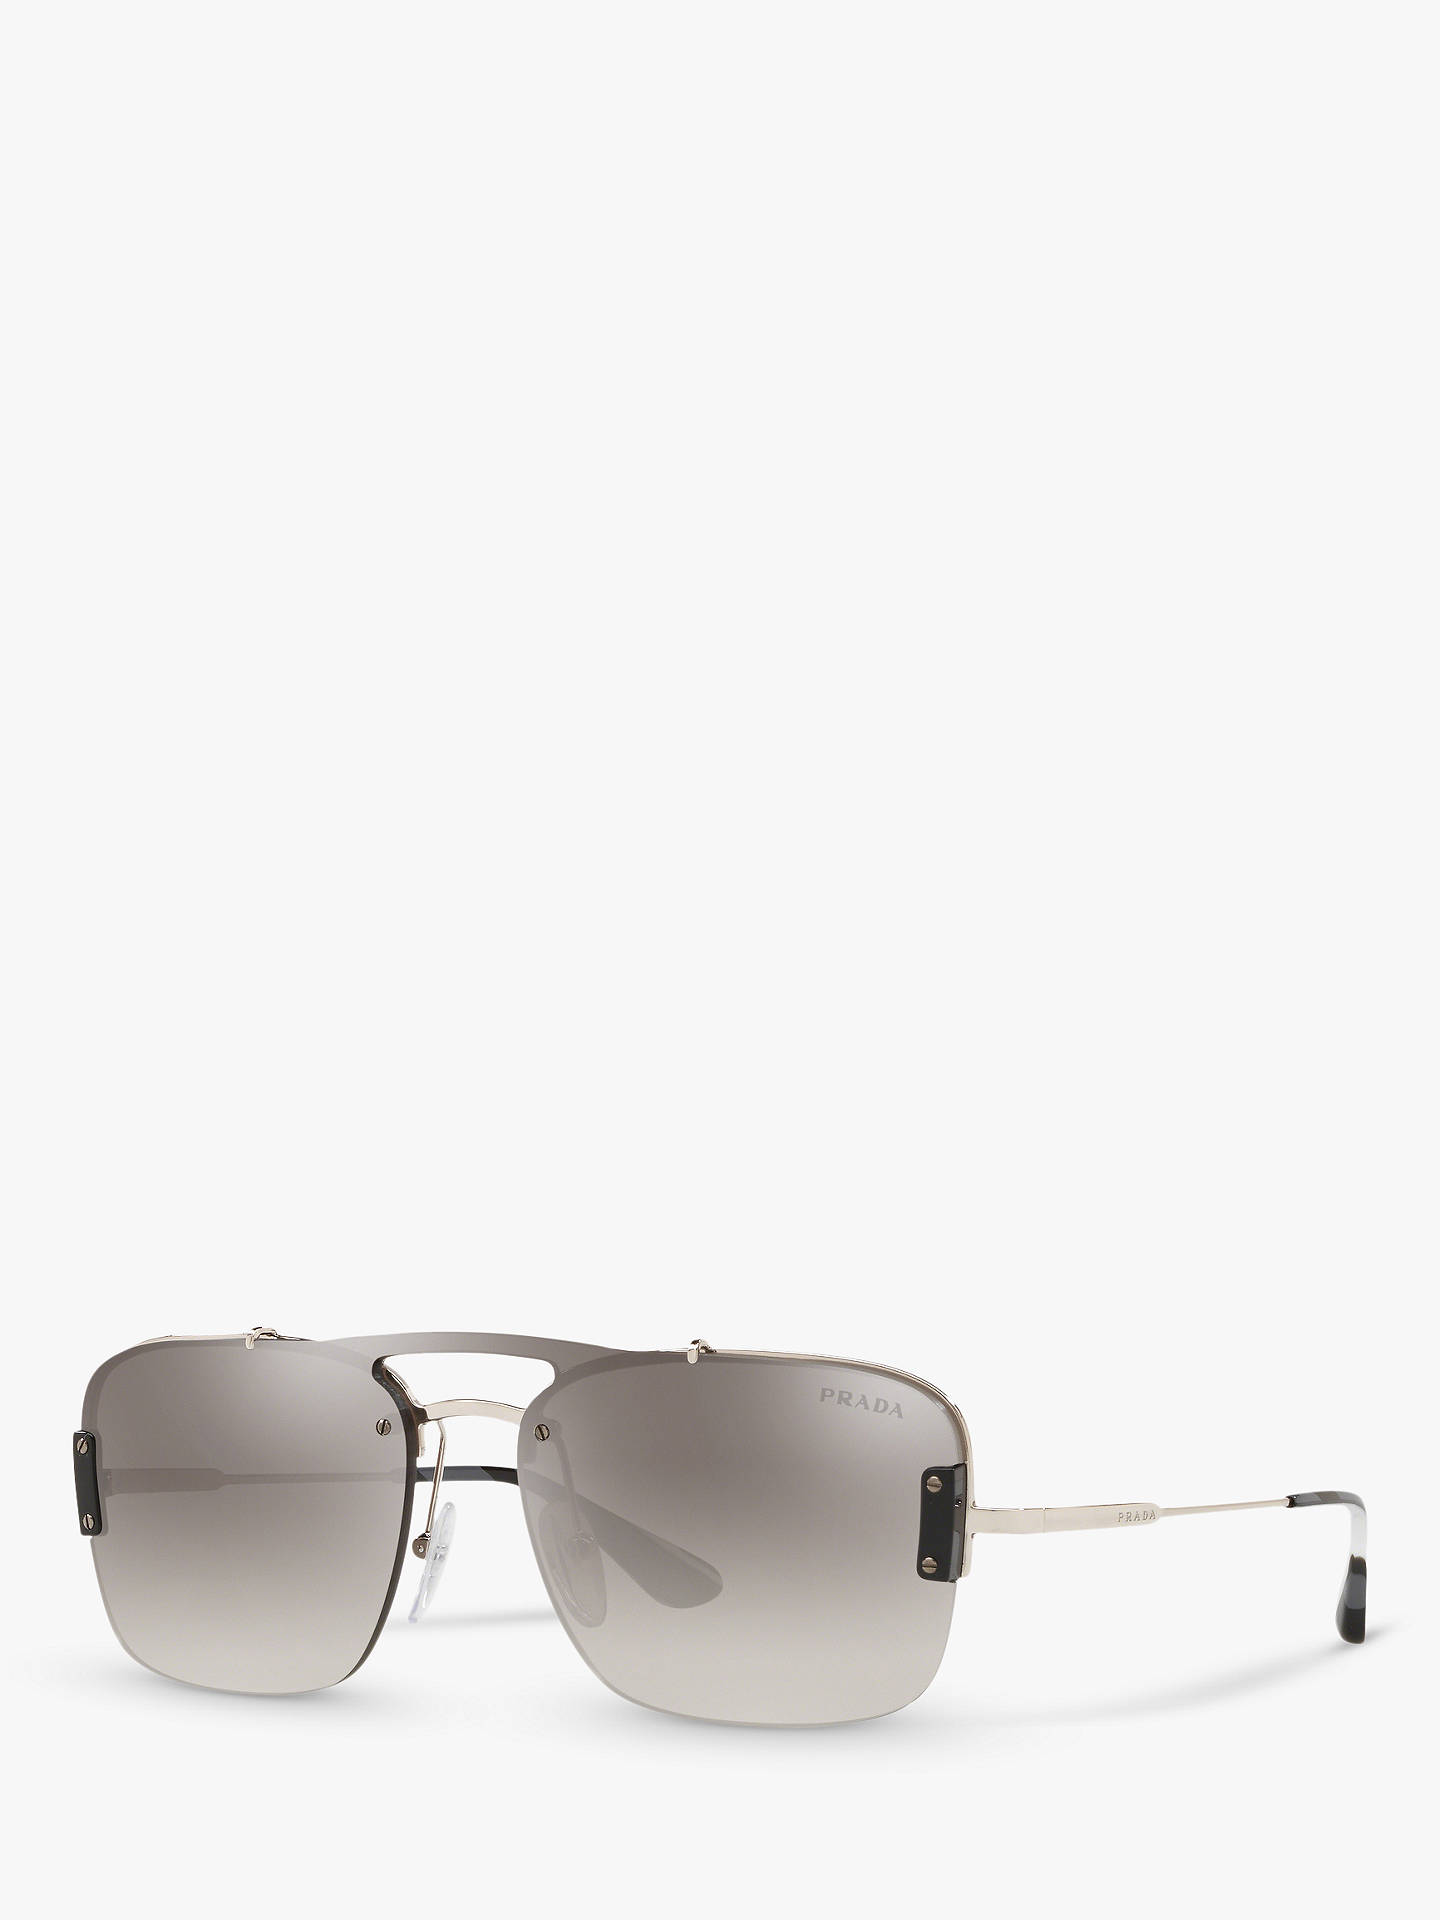 Prada PR 56VS Men's Square Sunglasses, Silver/Mirror Grey at John Lewis ...